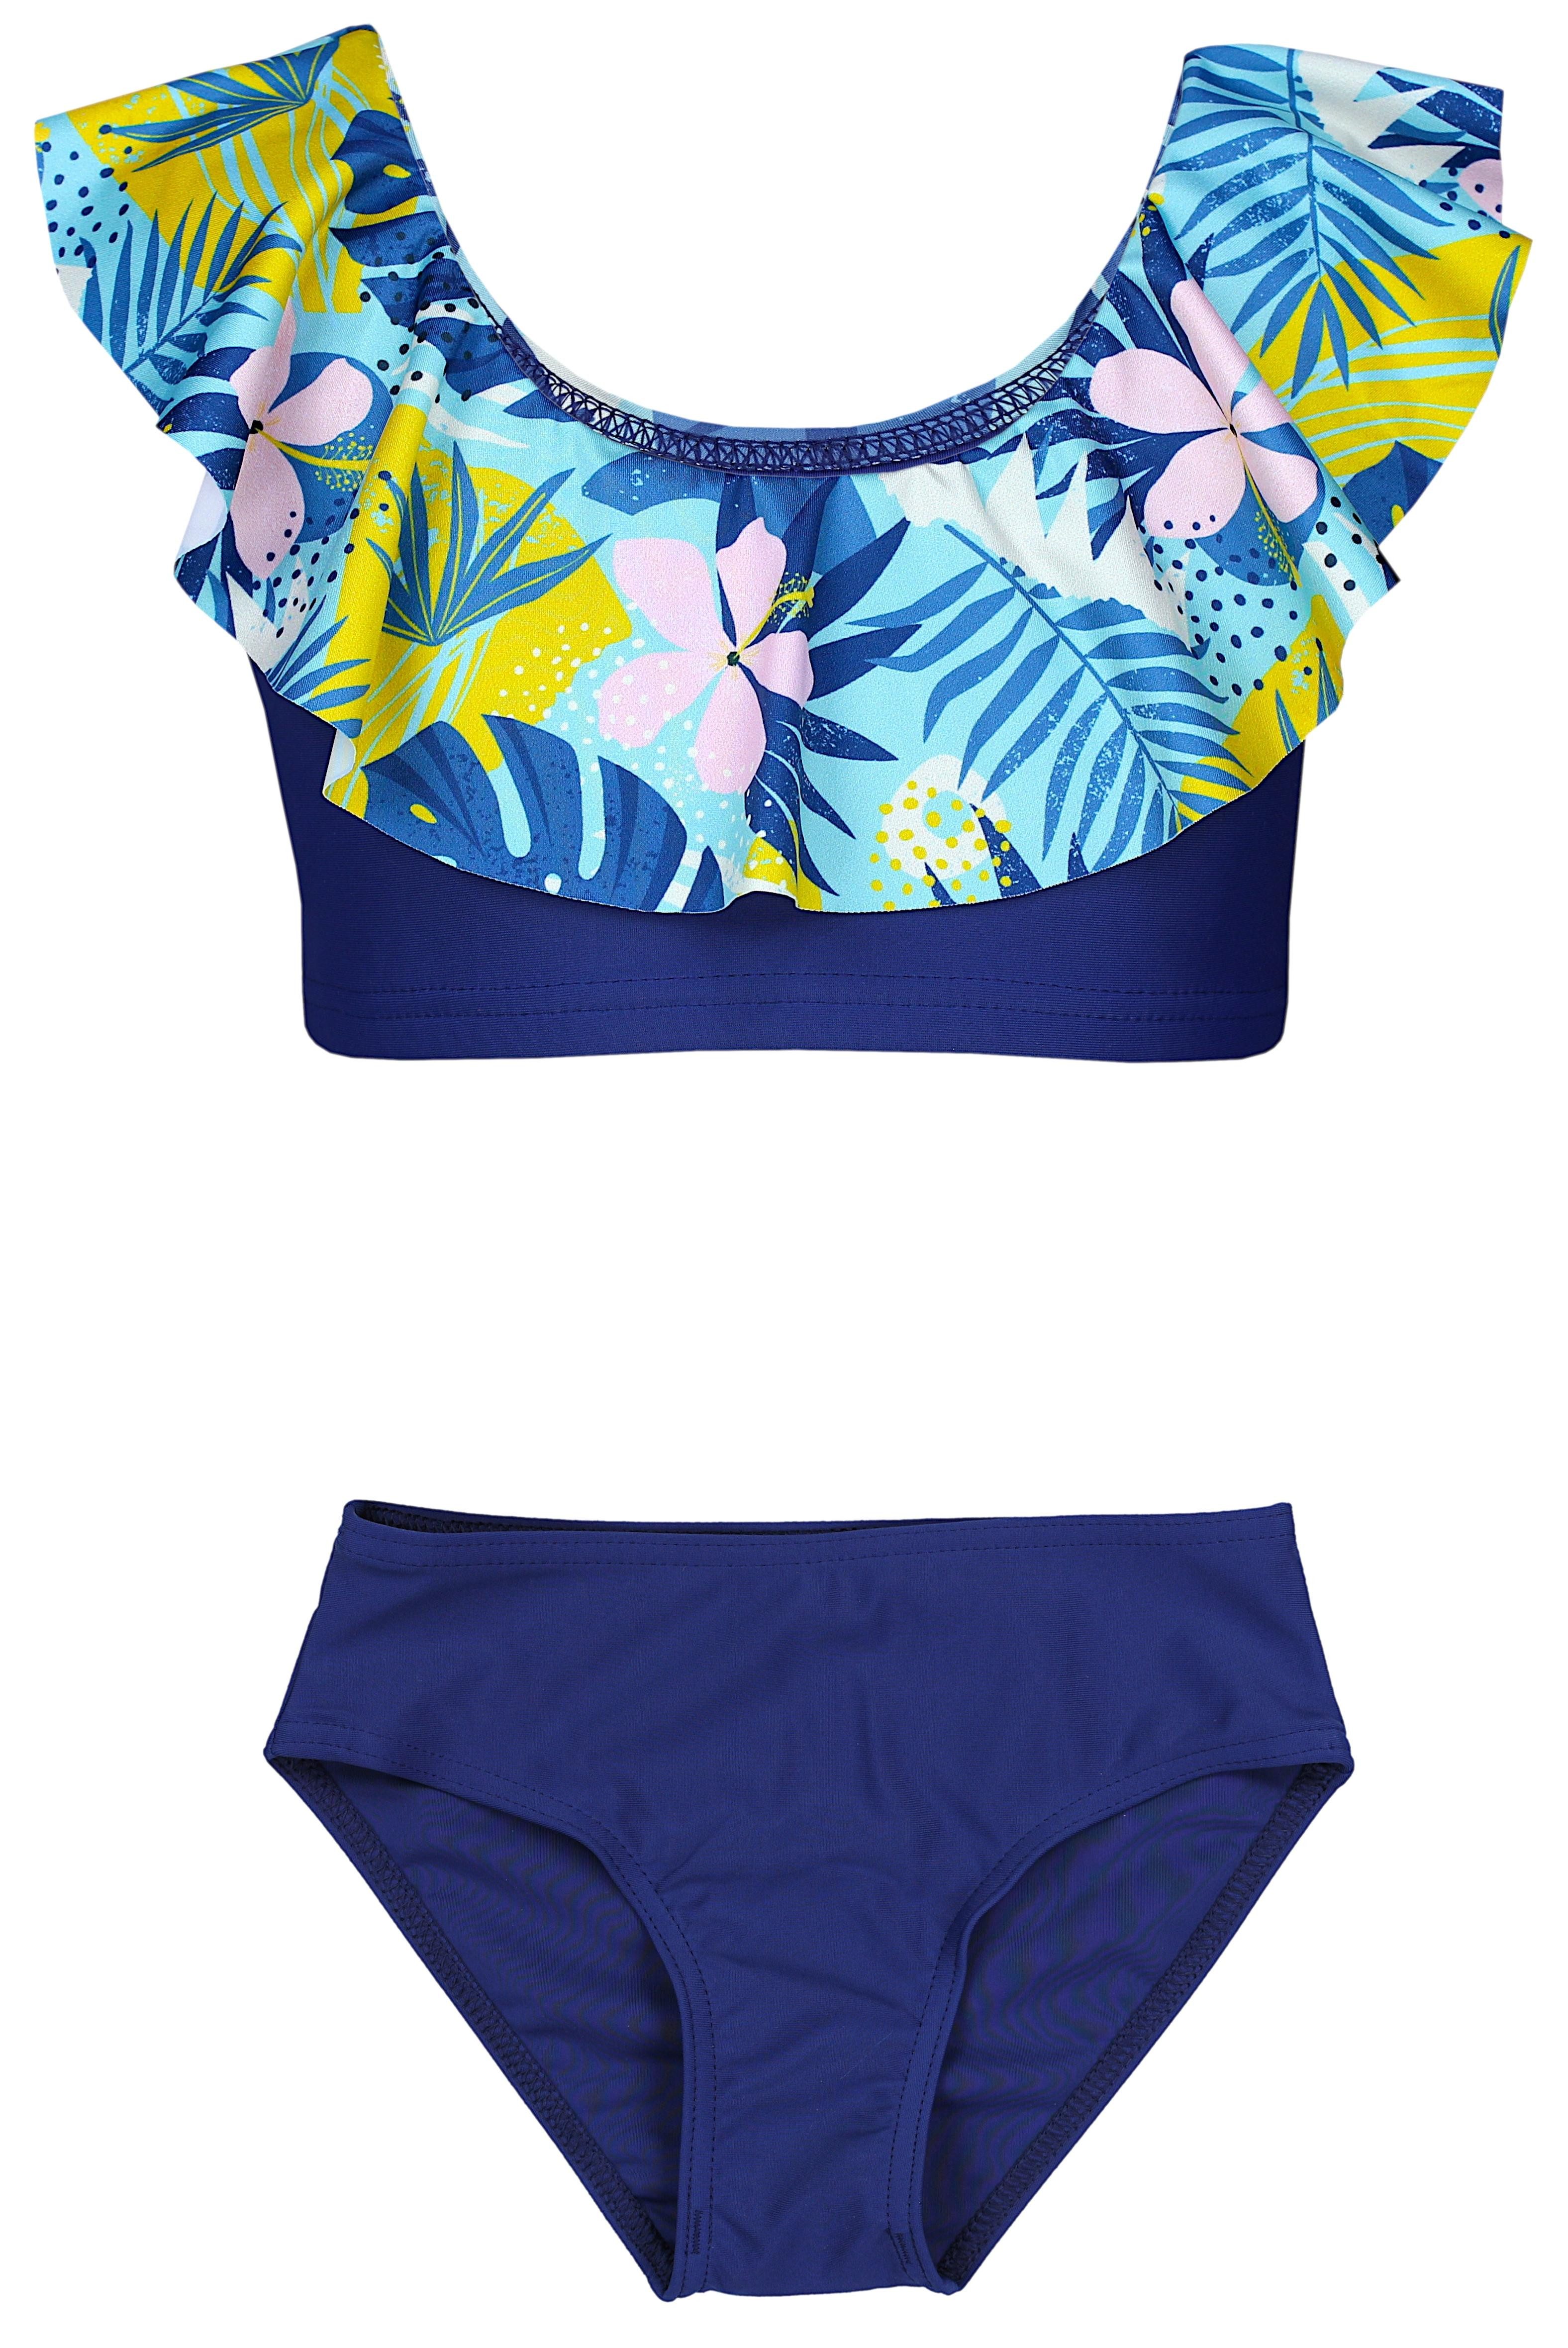 Aquarti Bustier-Bikini Aquarti Mädchen Bikini Set Bustier Bikinislip Zweiteiliger Badeanzug (Zweiteiliger Badeanzug)